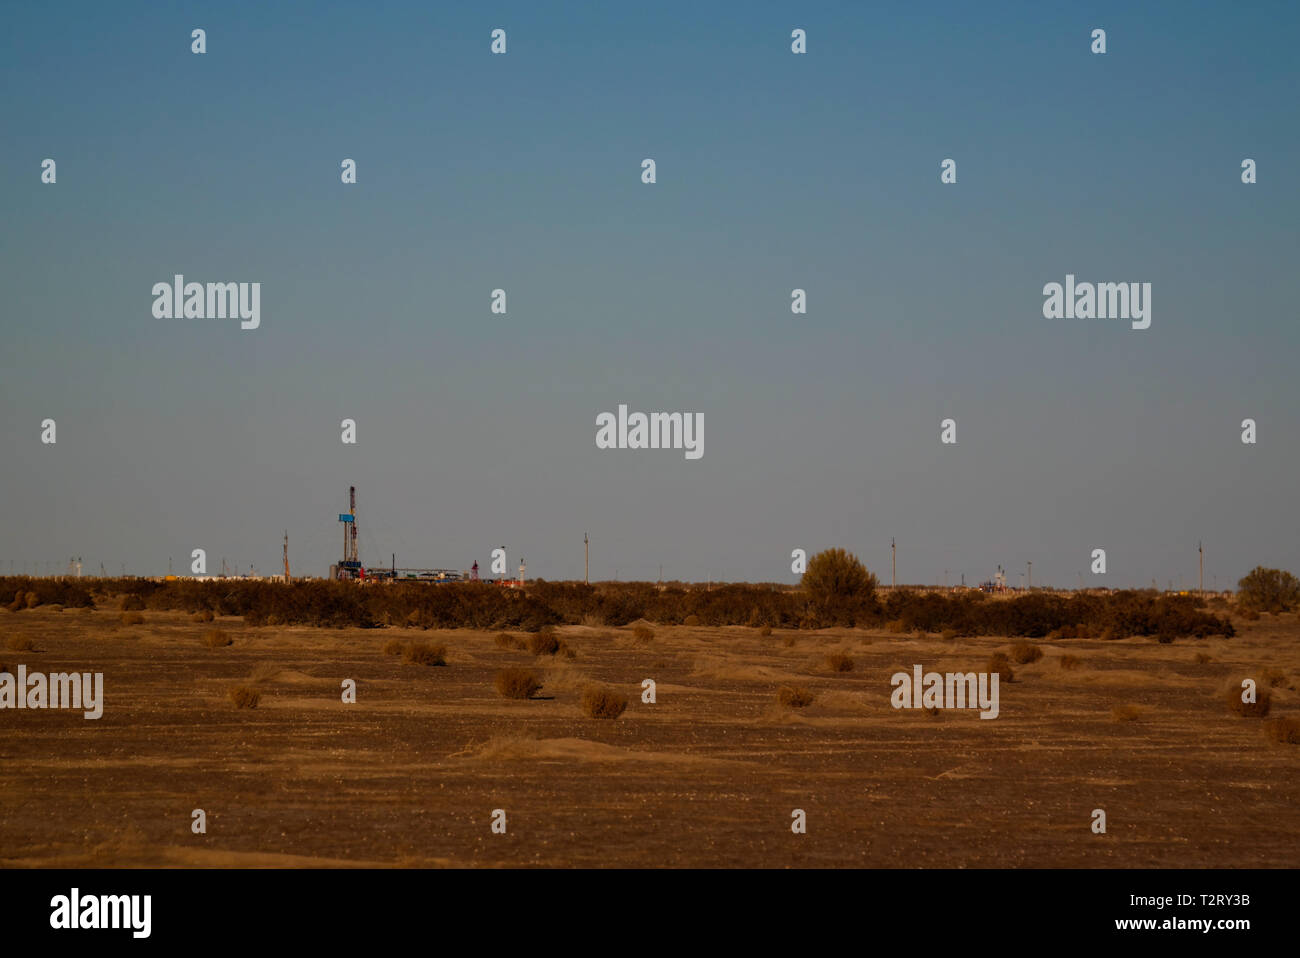 nature gas production at Aralcum desert as a bed of former Aral sea at Karakalpakstan, uzbekistan Stock Photo